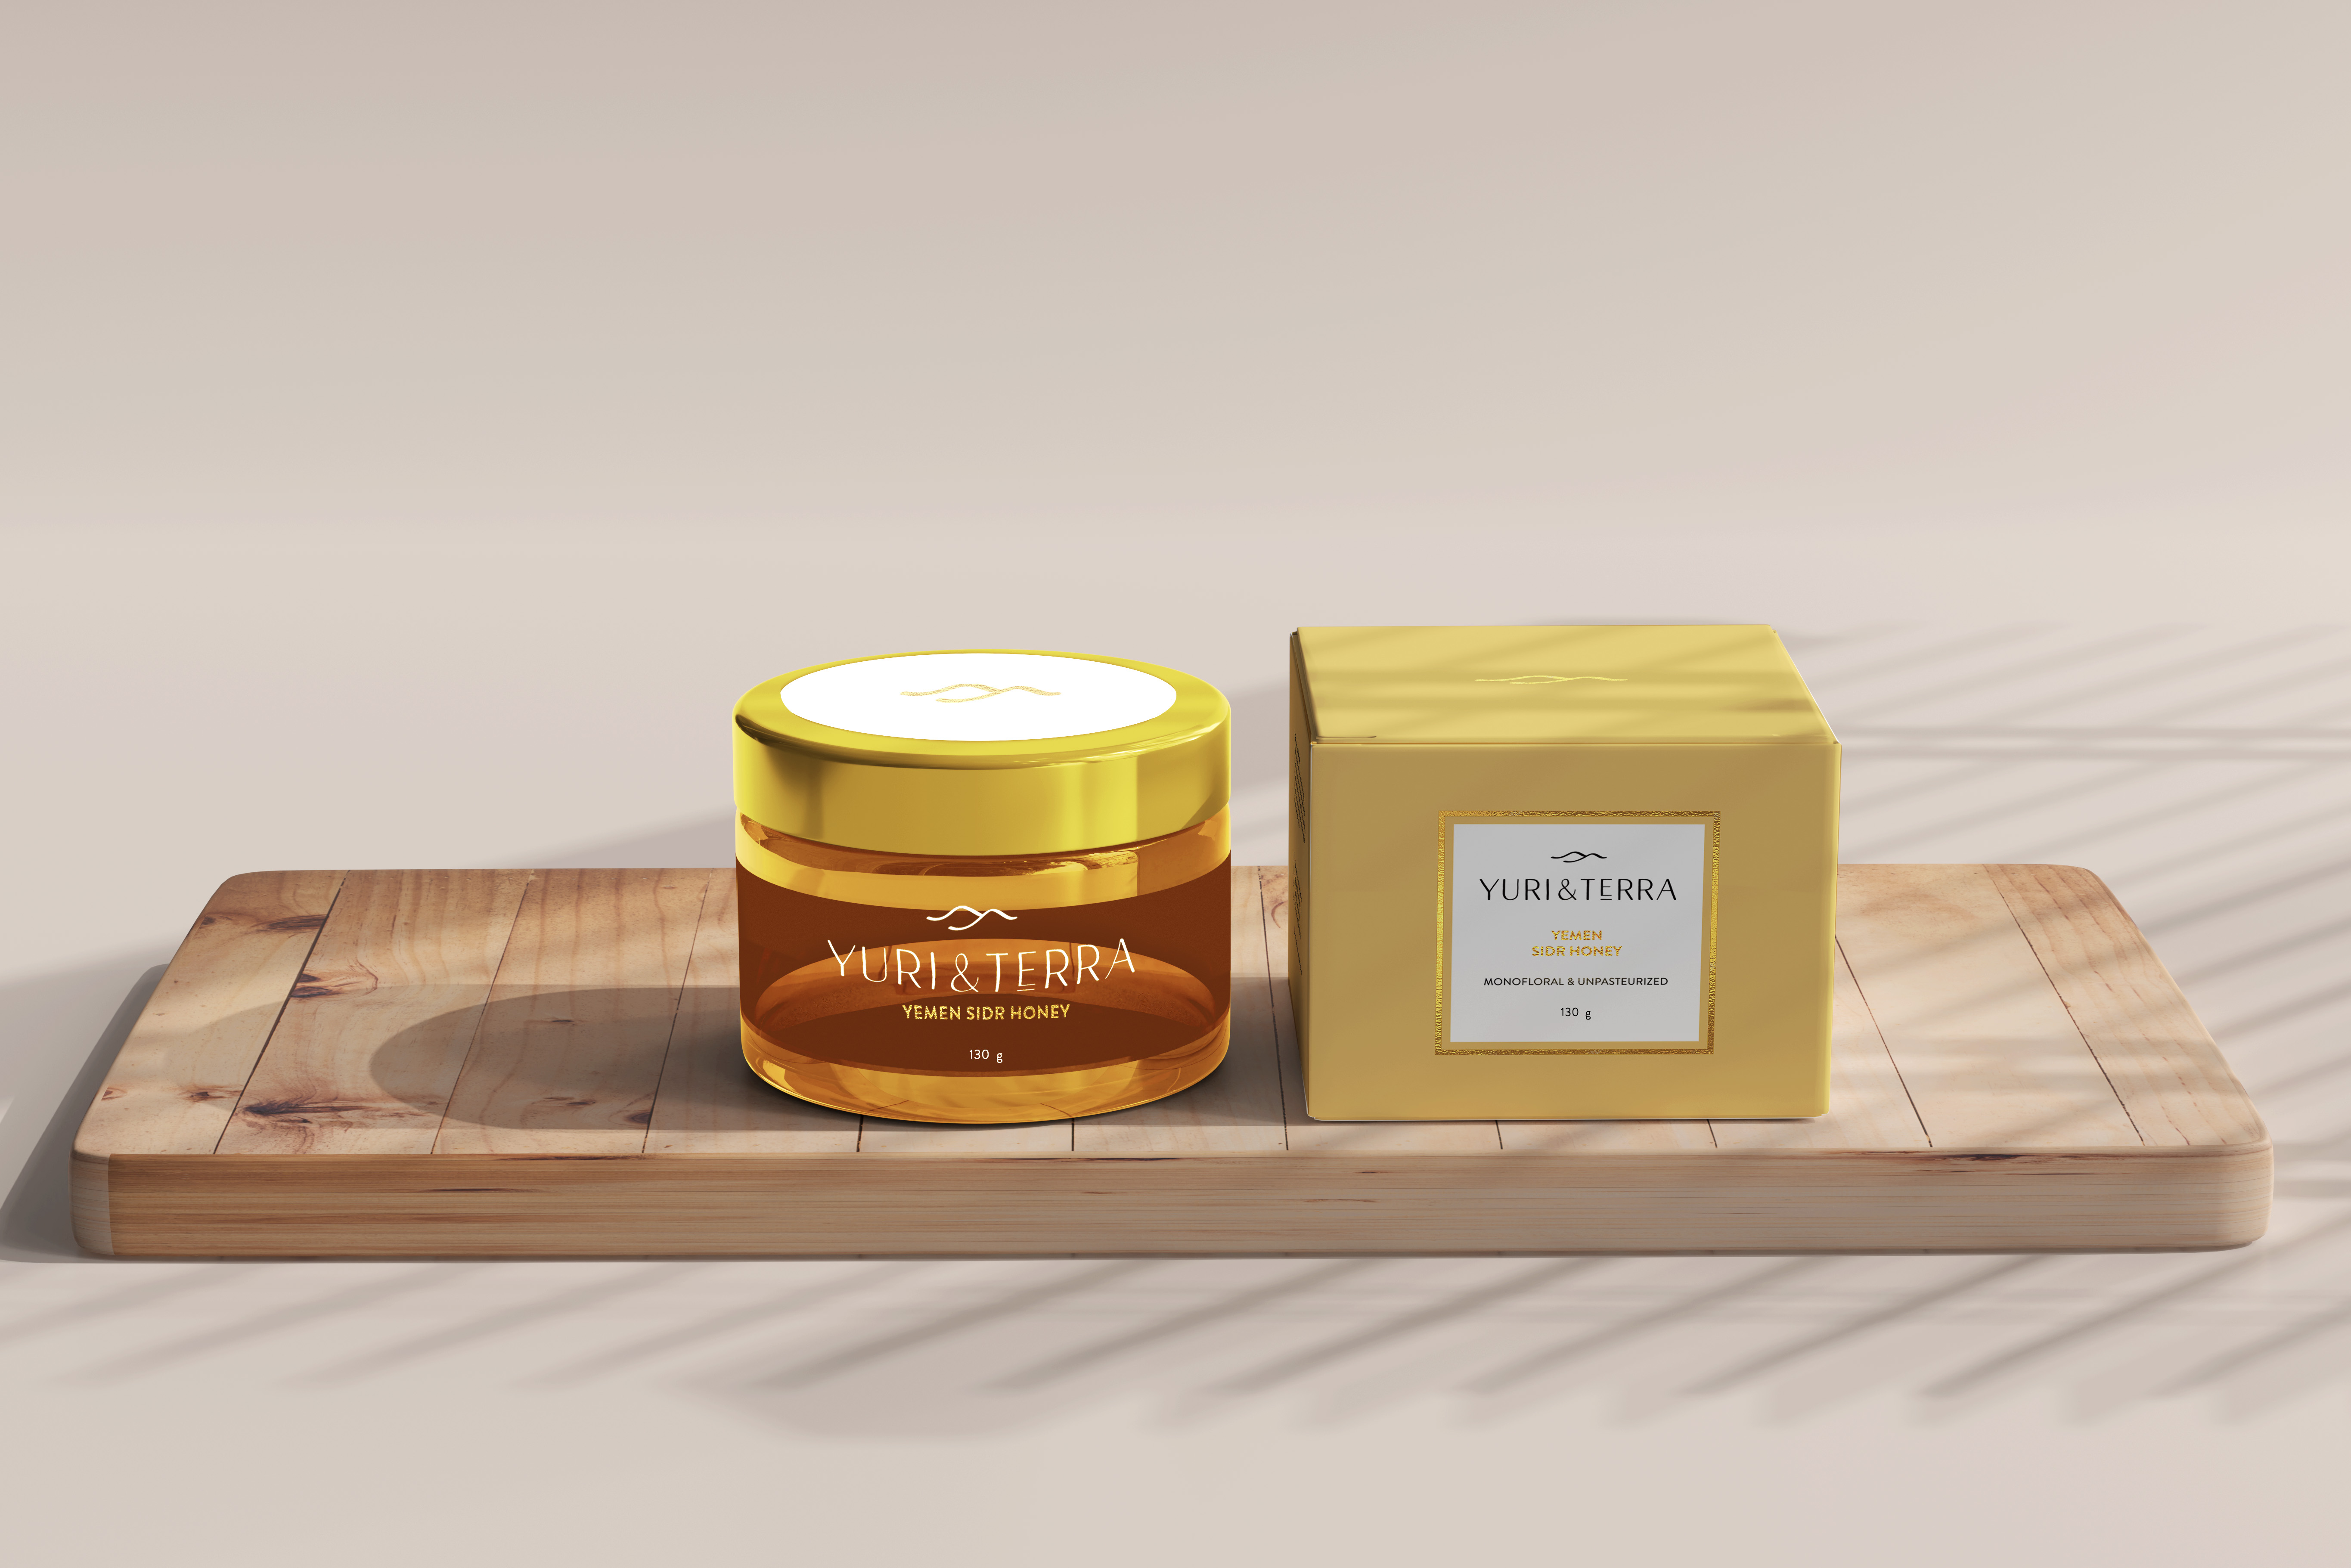 YURI & TERRA Yemen Sidr Honey Packaging